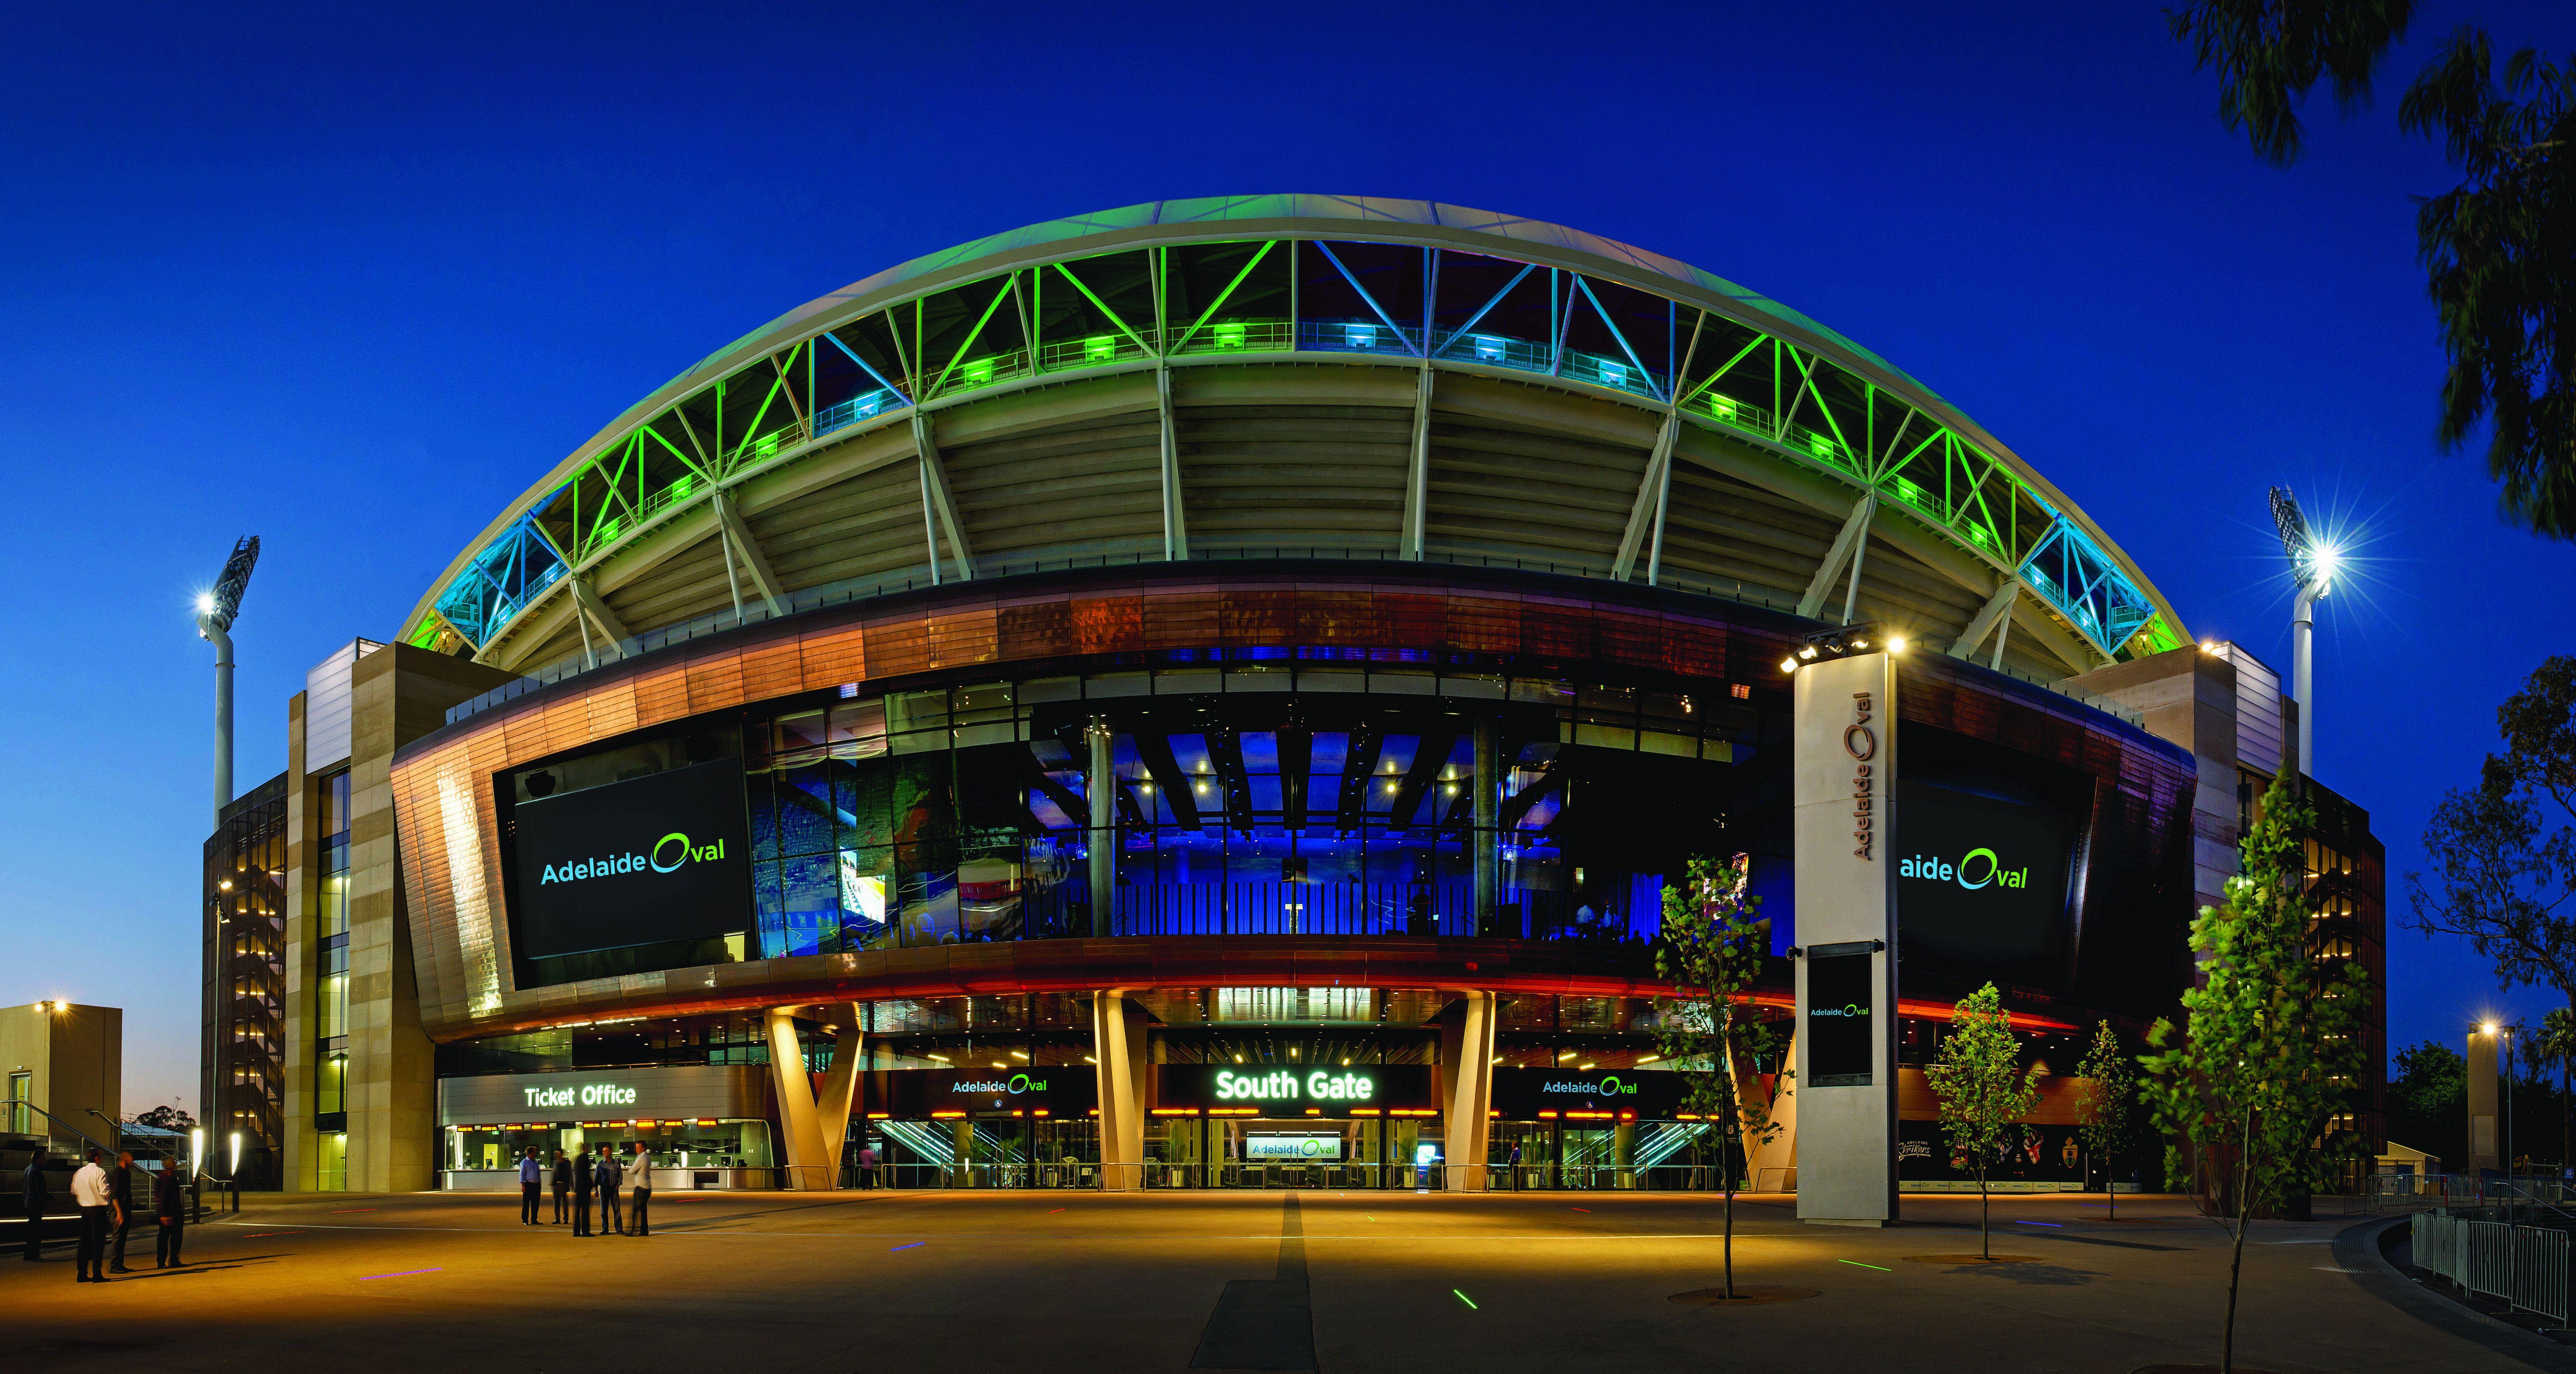 Adelaide Oval Stadium, Australia wallpaper and image